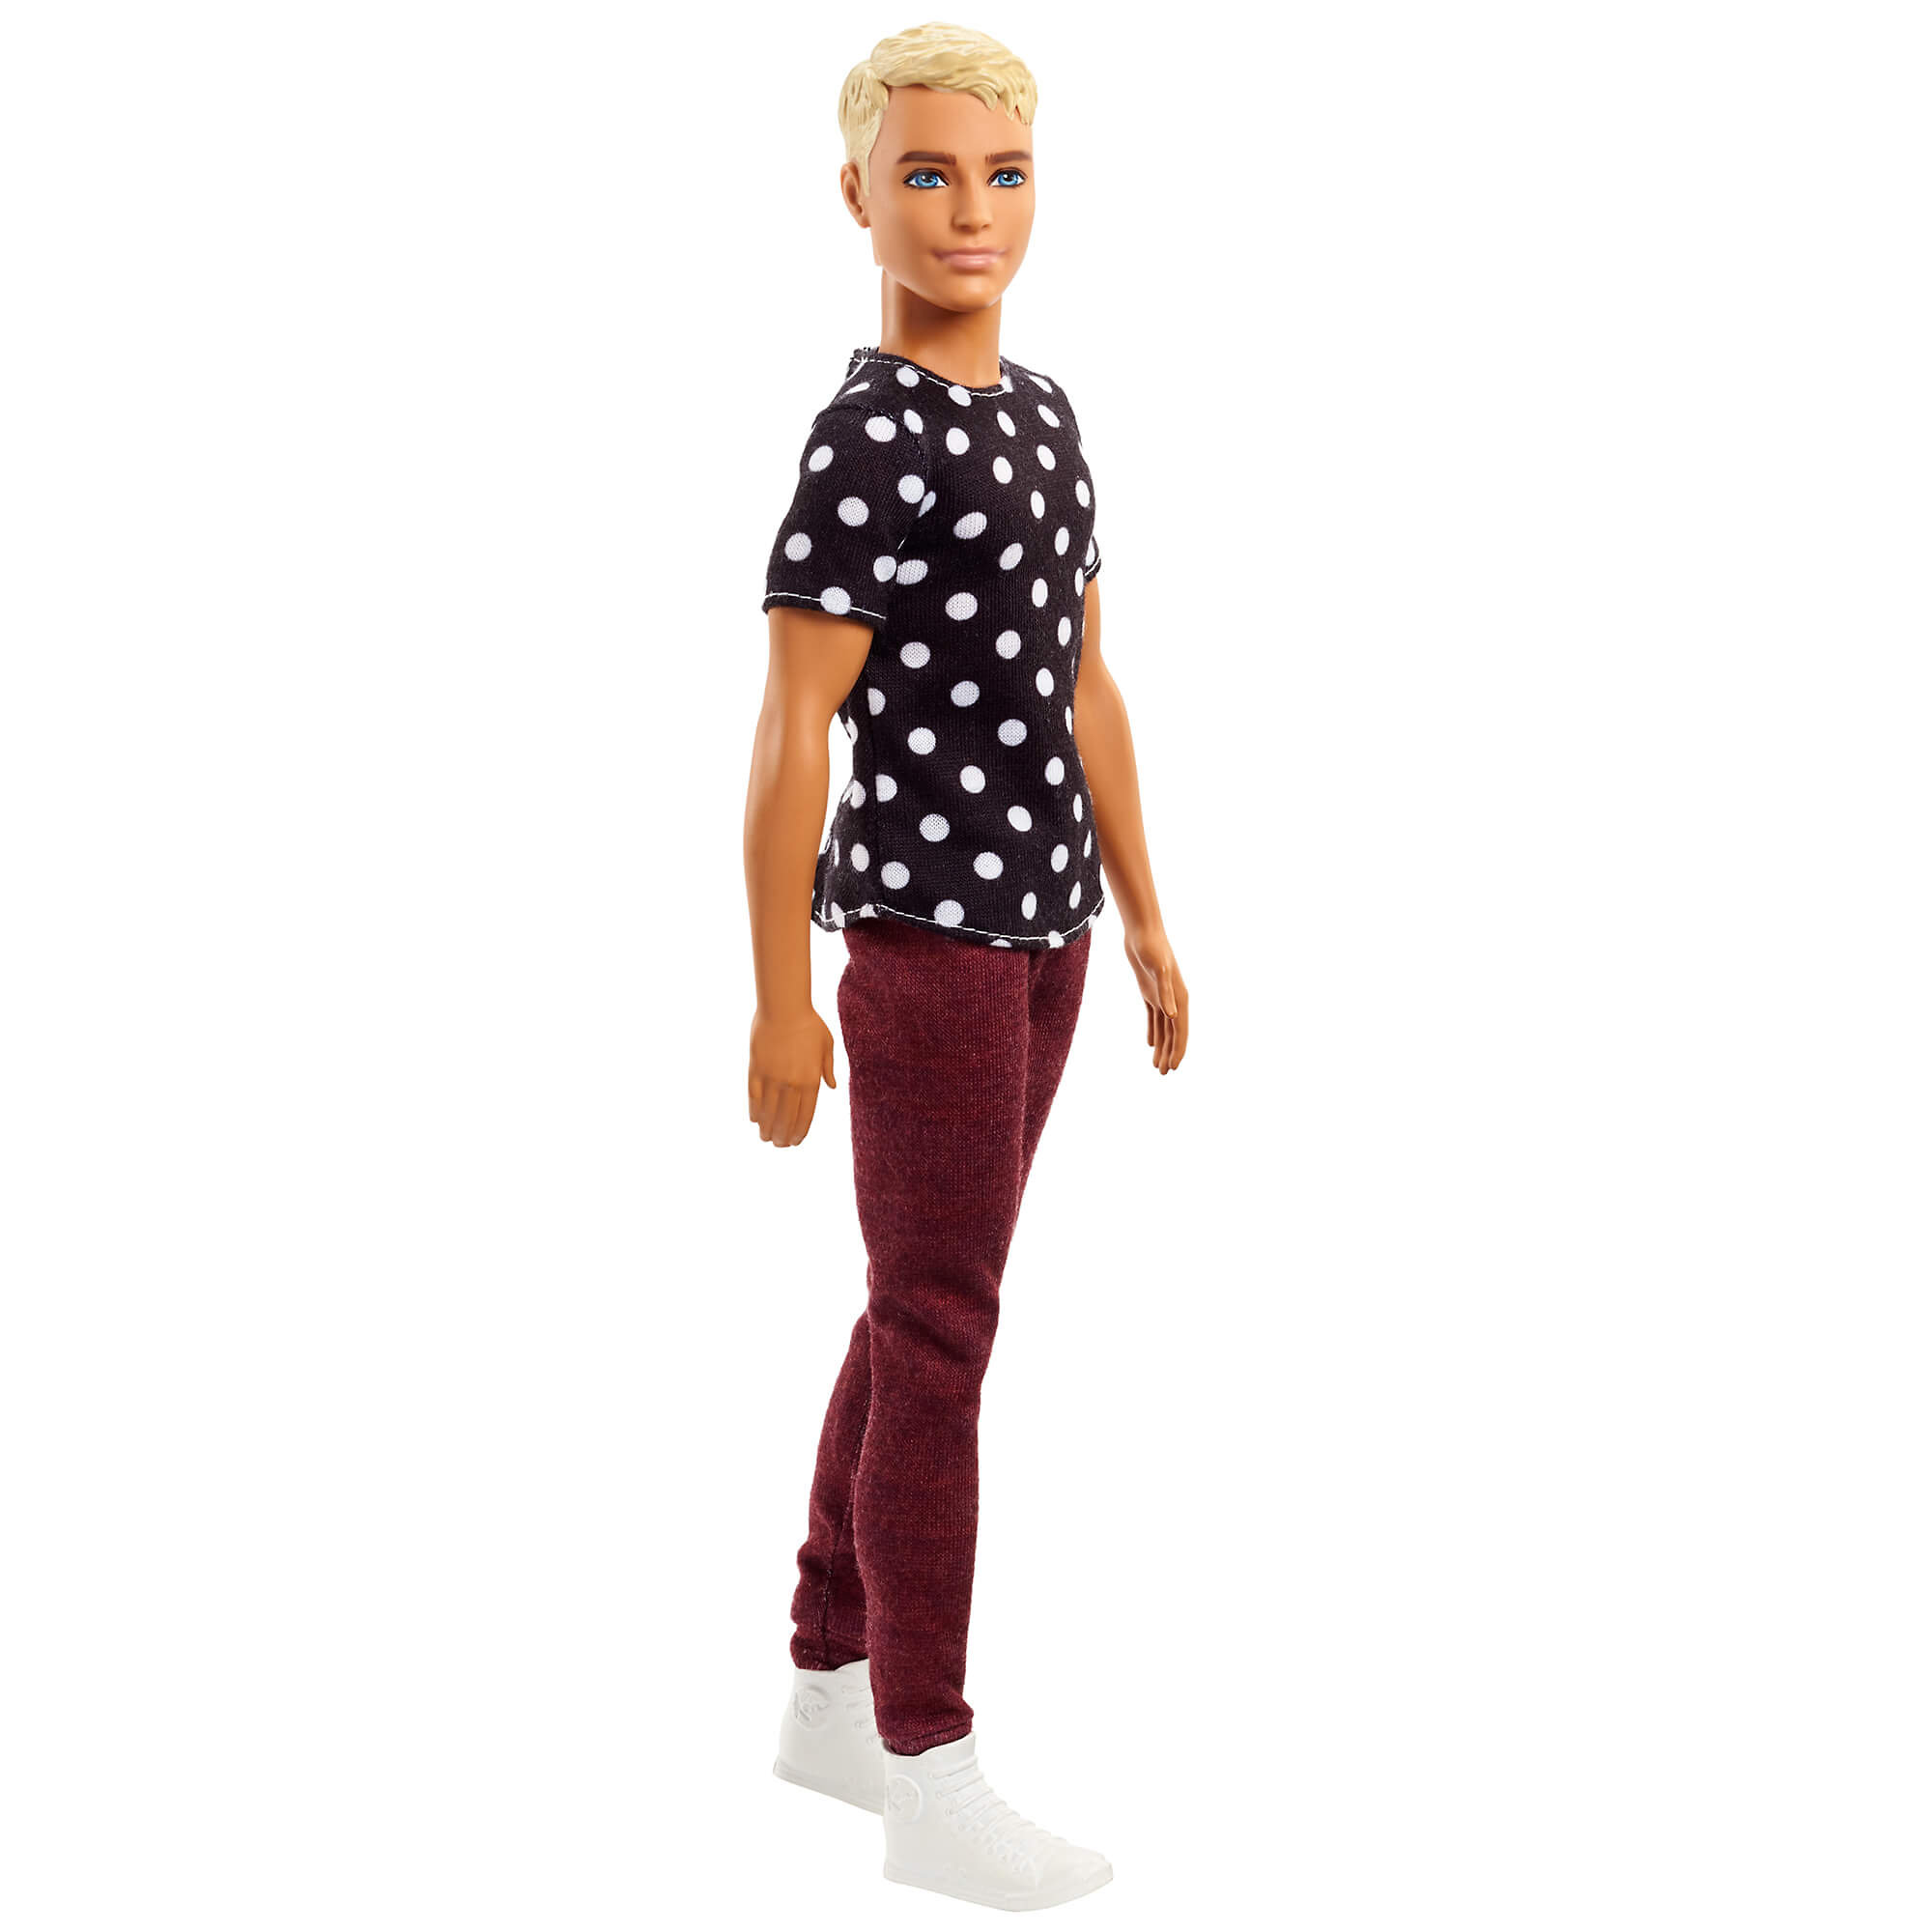 Barbie Fashionistas Ken Doll Wearing Polka Dot Top & Red Pants - image 2 of 5